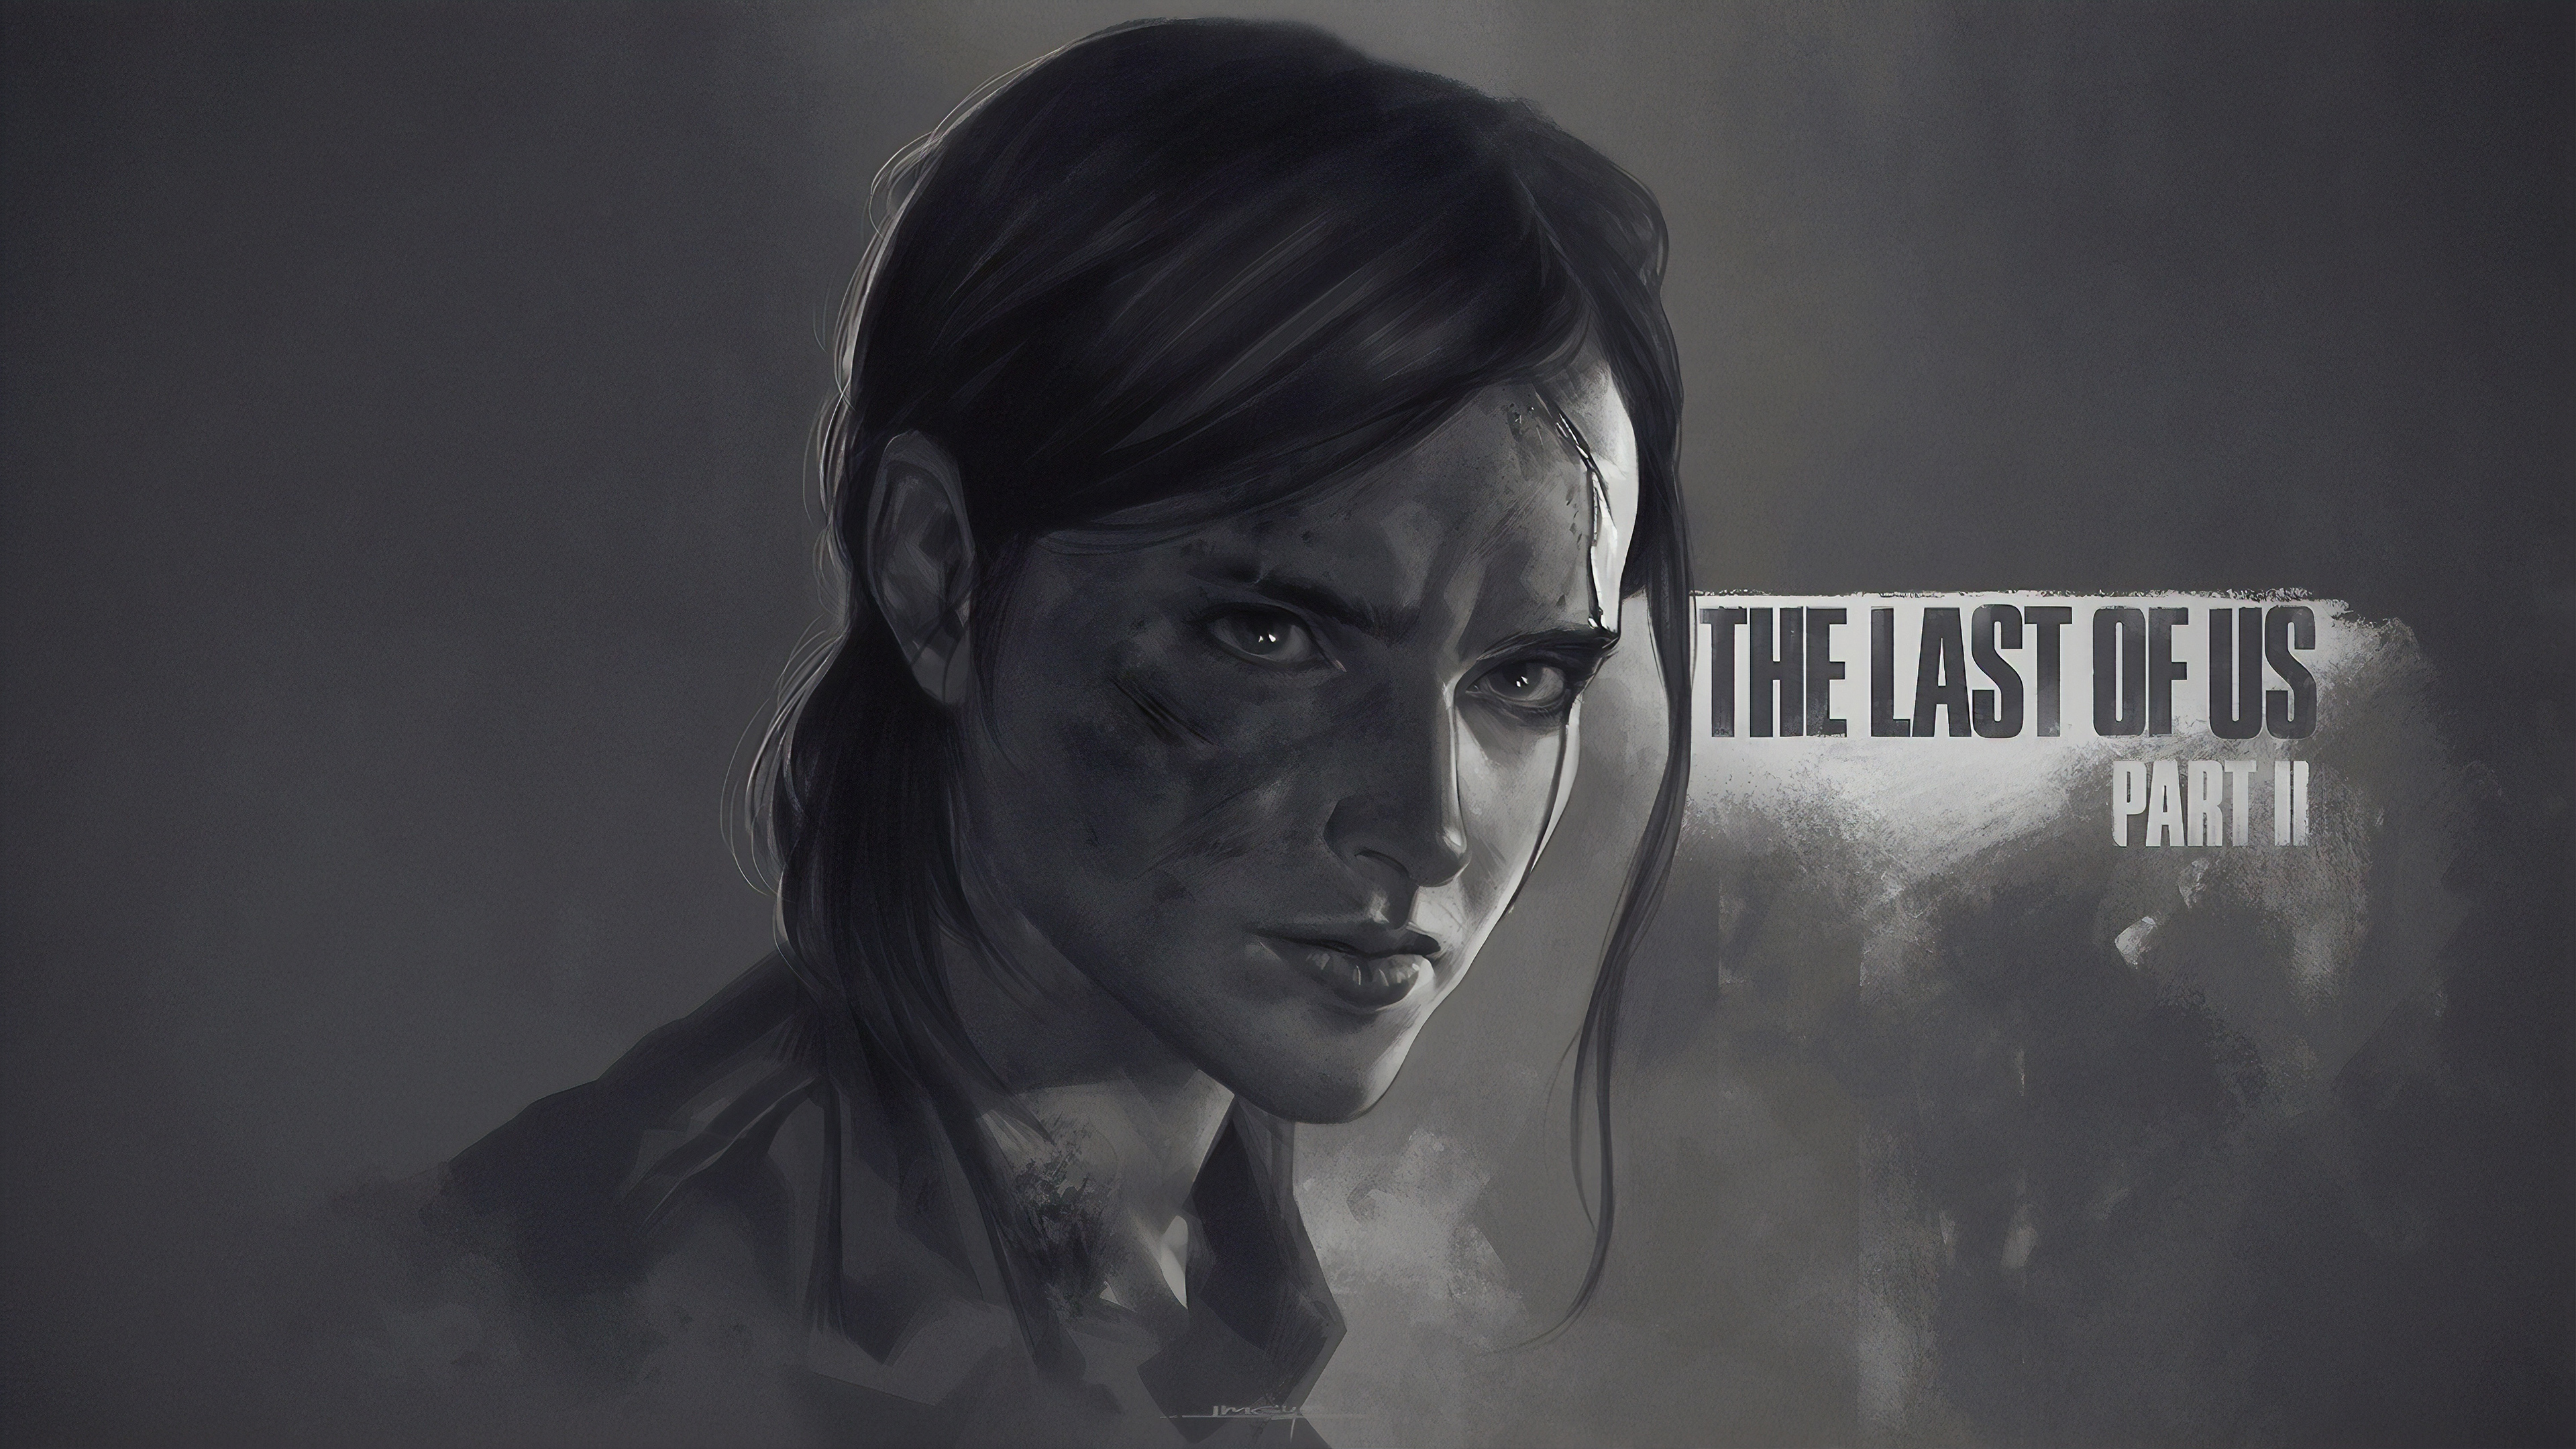 Wallpaper 4k Ellie The Last Of Us Part 2 Monochrome Poster 2019